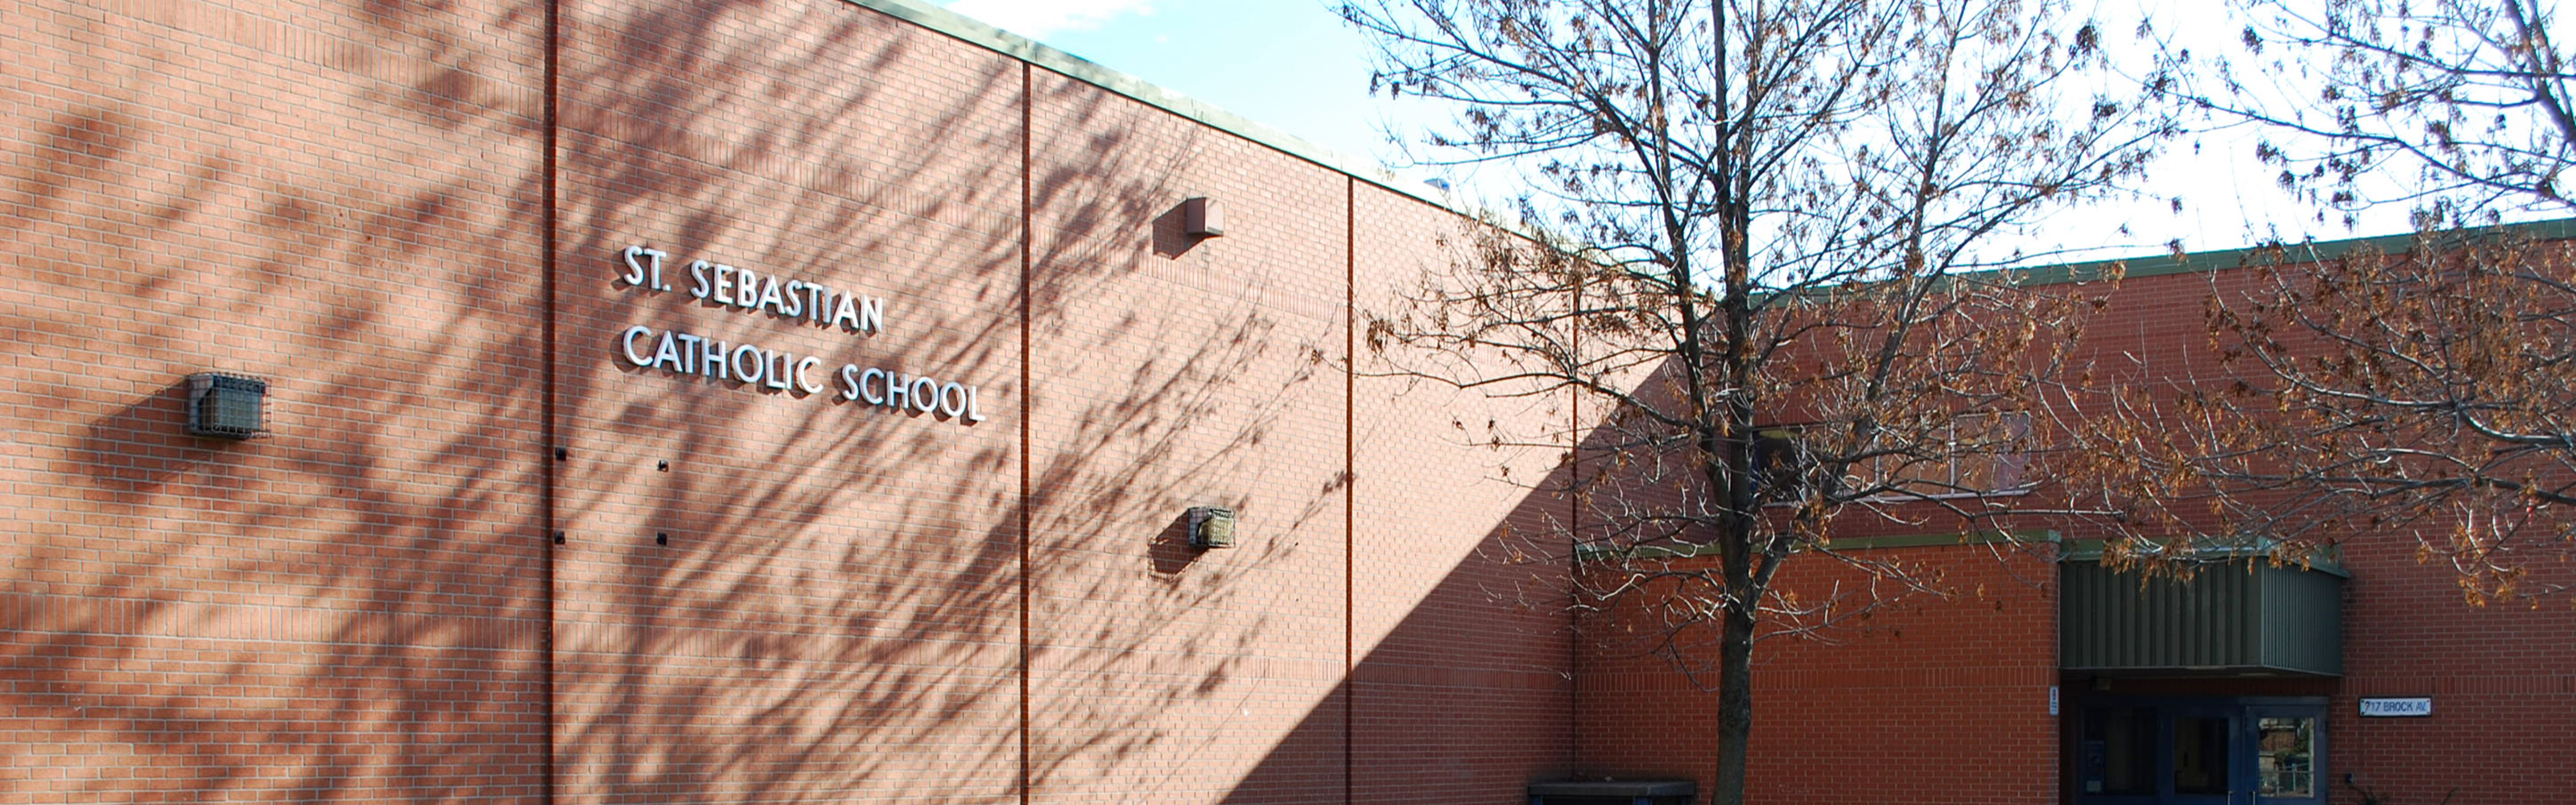 The front of the St. Sebastian Catholic School building.